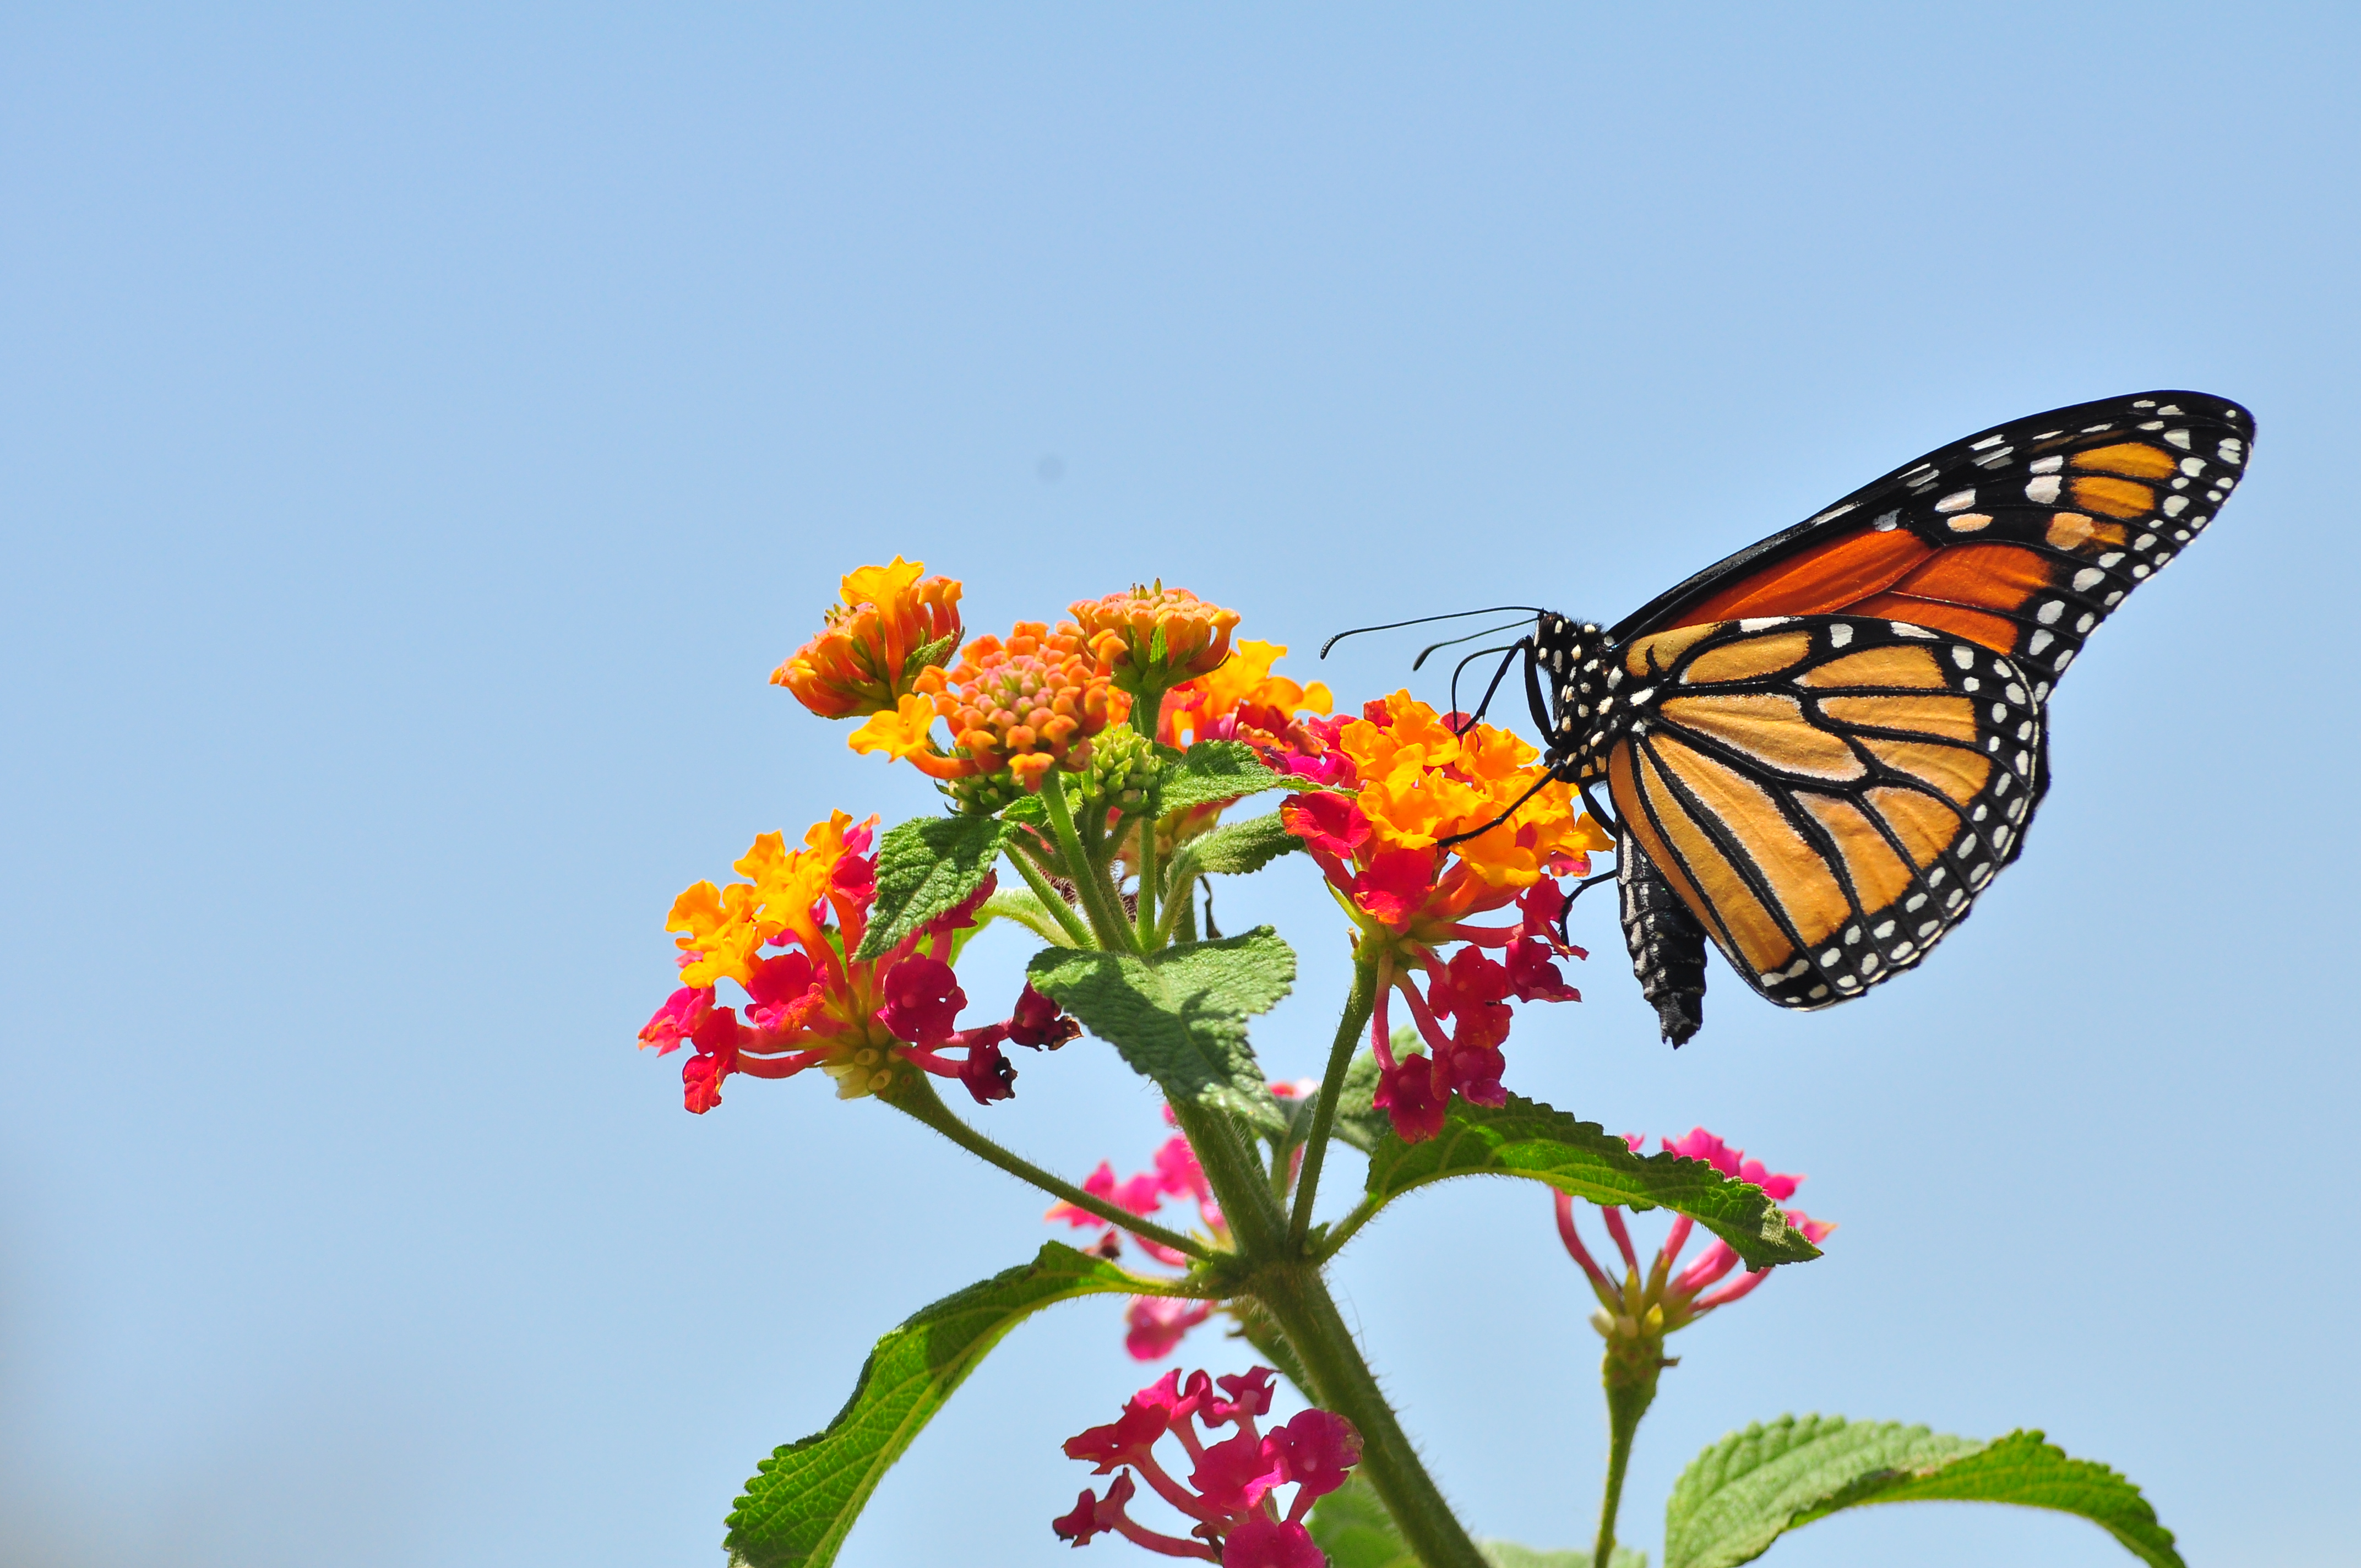 Monarch butterflies losing their food source, numbers declining ...